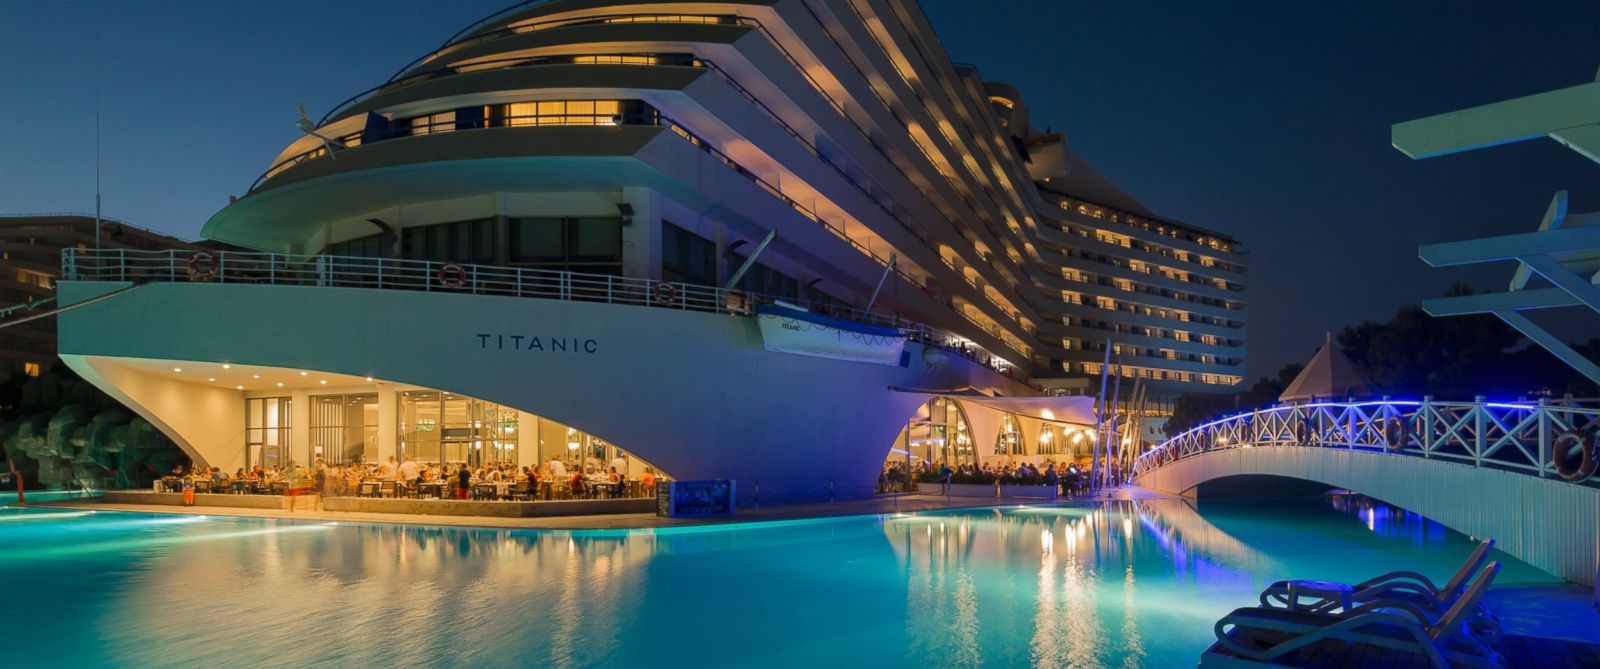 Titanic Hotel Lara Beach Turkey Take a Peek at Turkey's 'Titanic Hotel' - ABC News